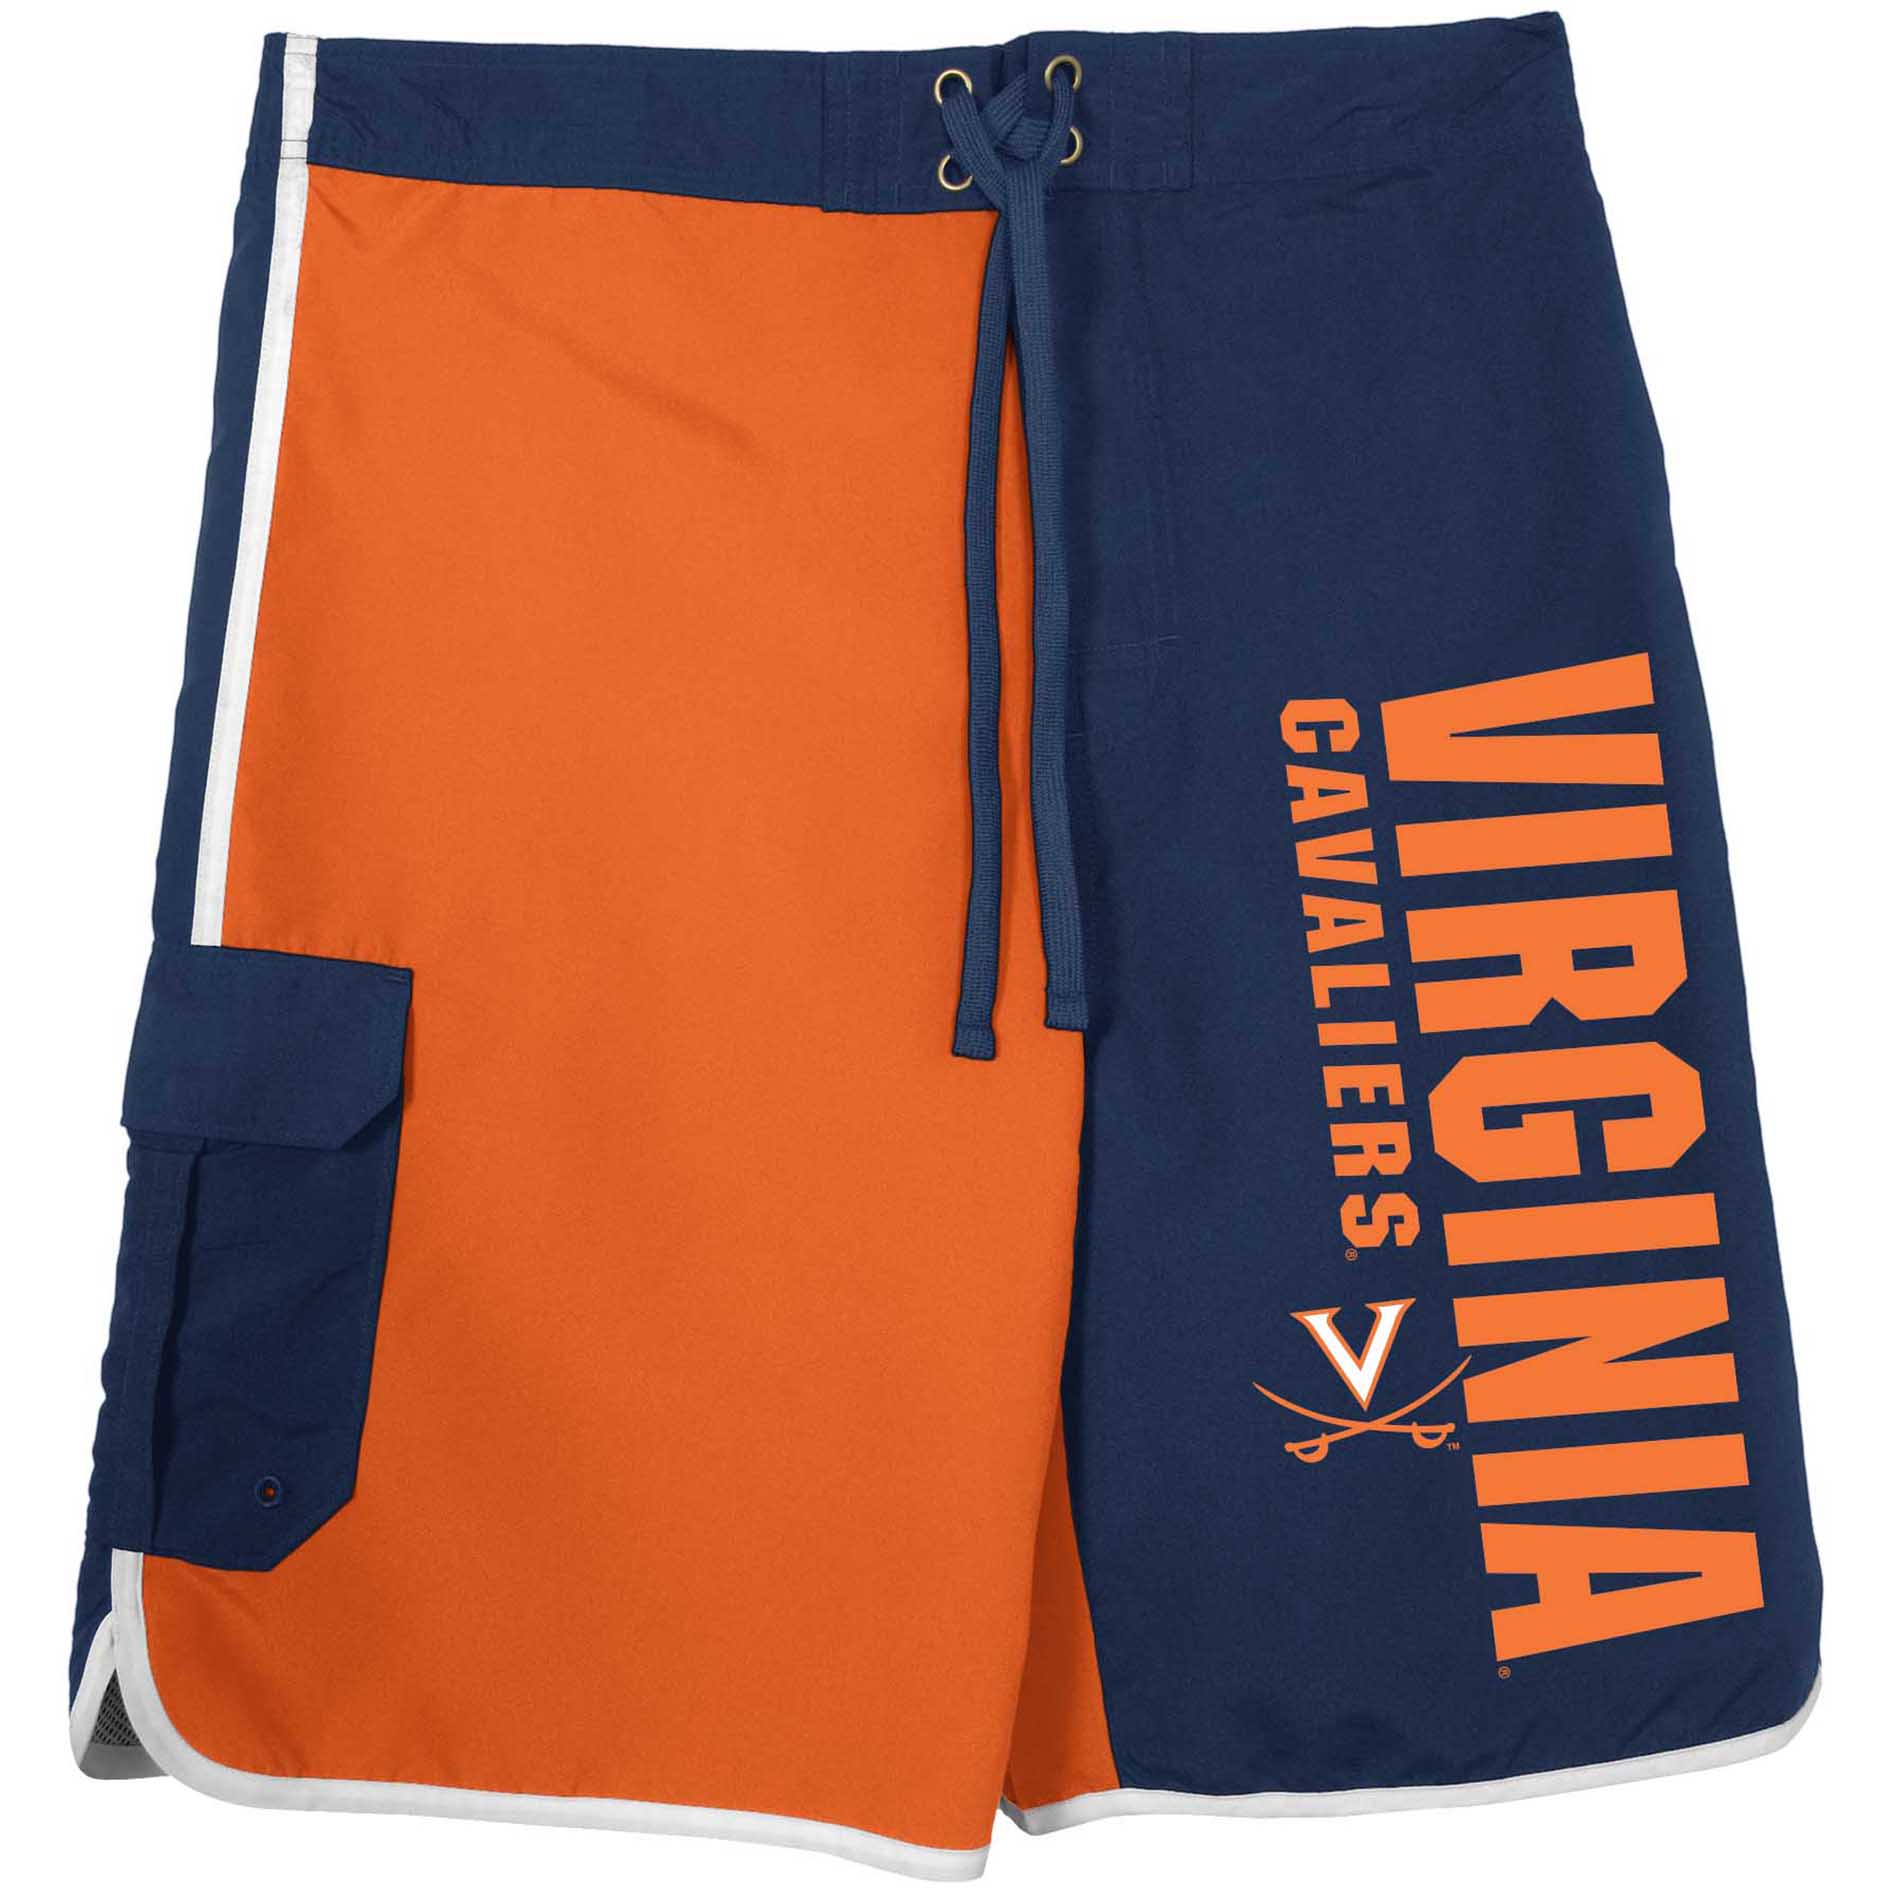 NCAA Mens' Virginia Cavaliers Board Shorts